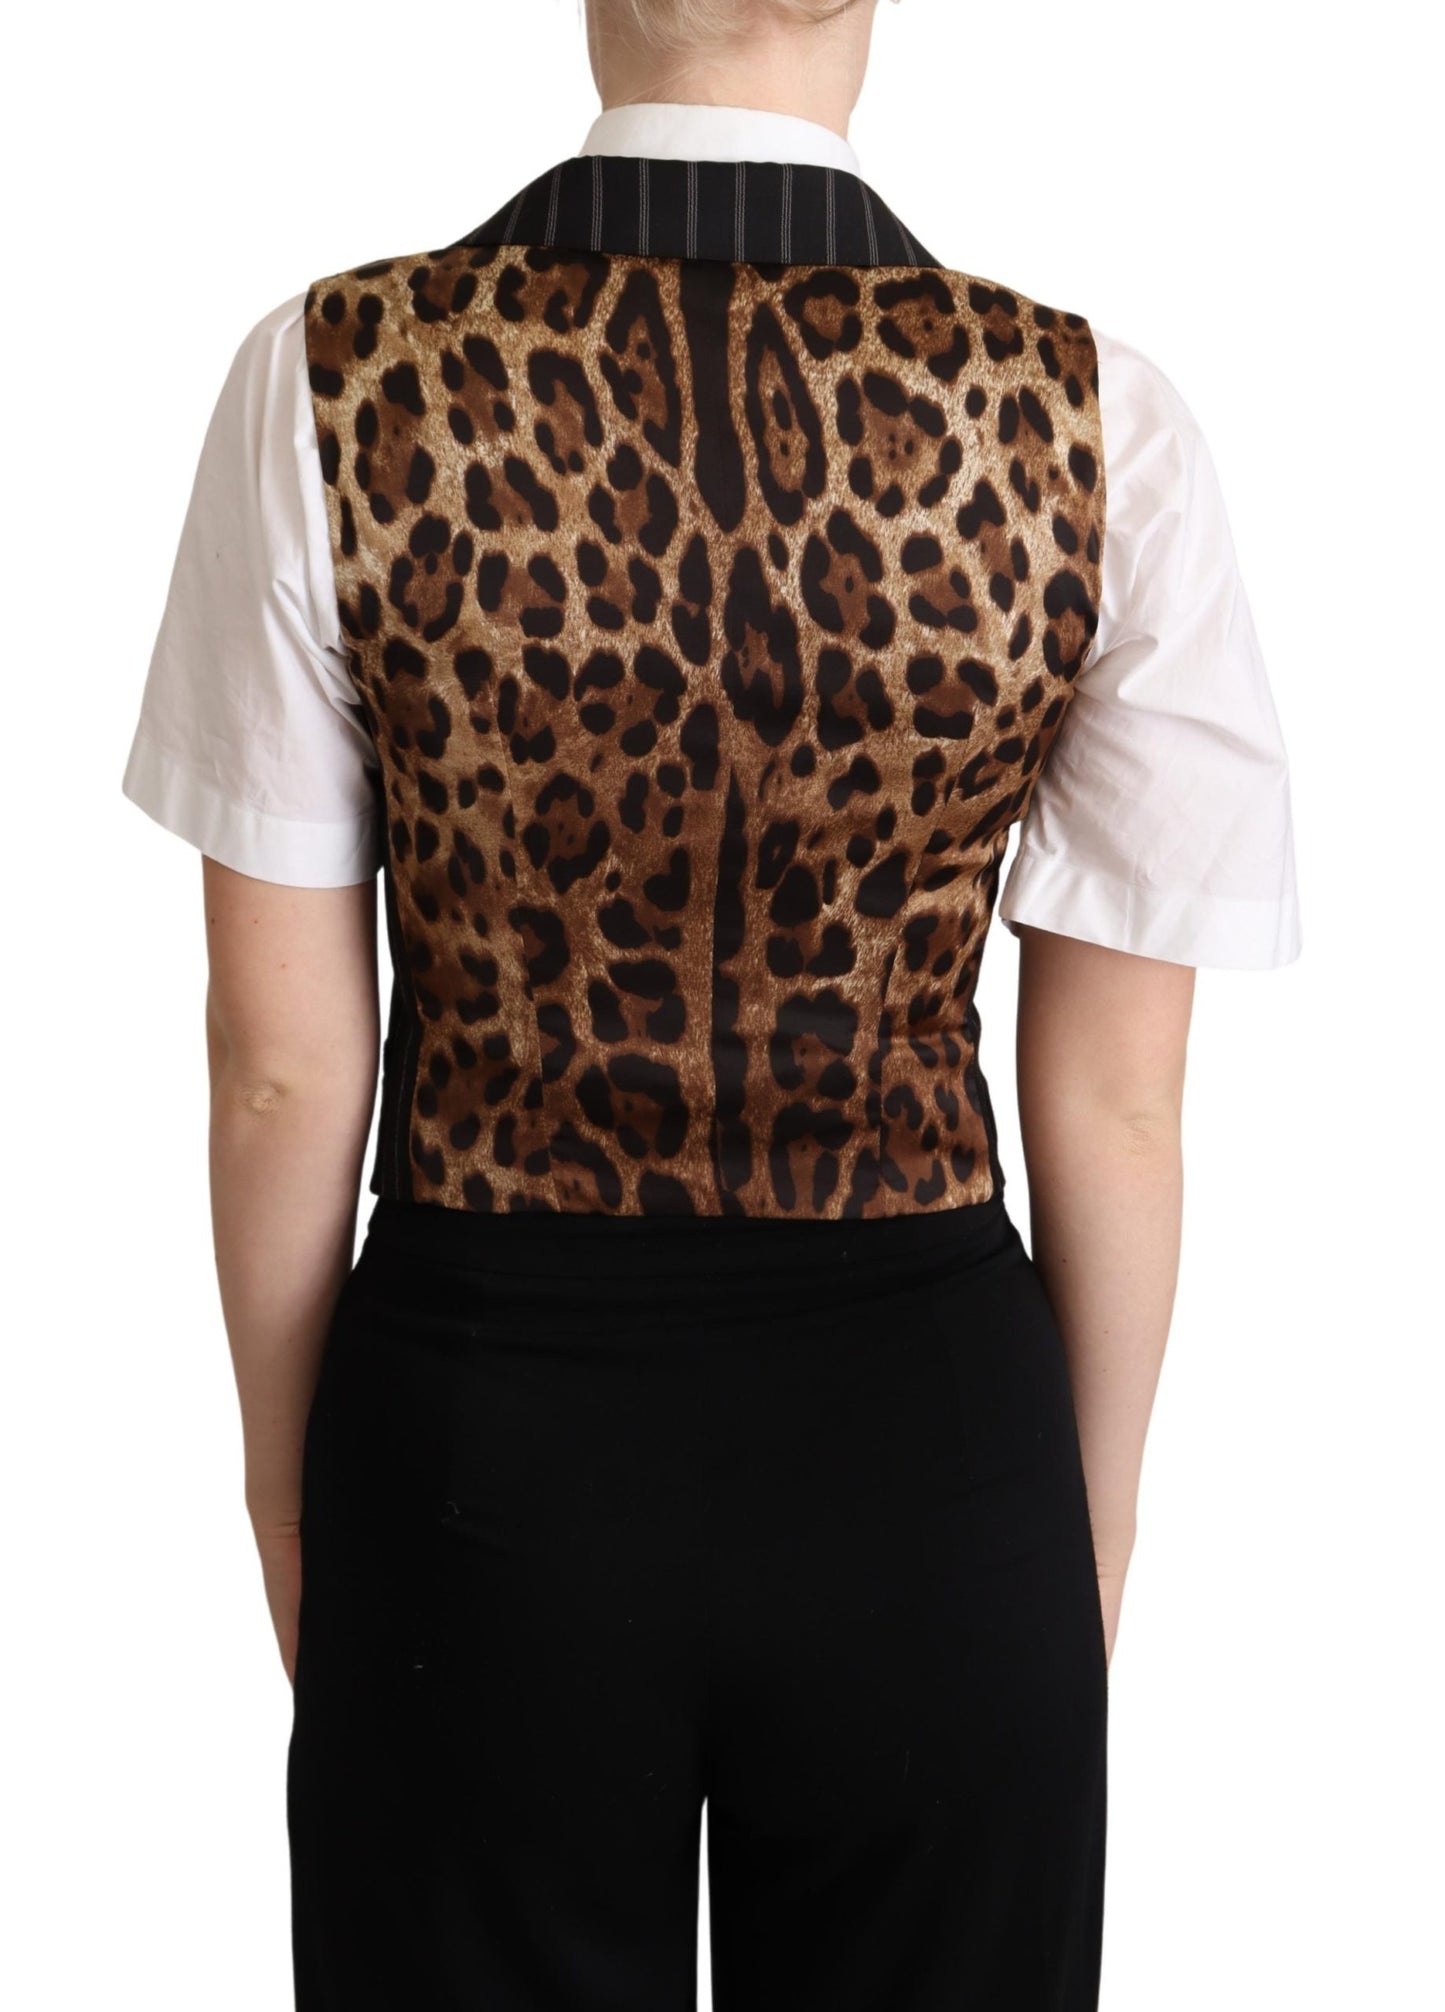 Black Striped Leopard Print Waistcoat Vest Top